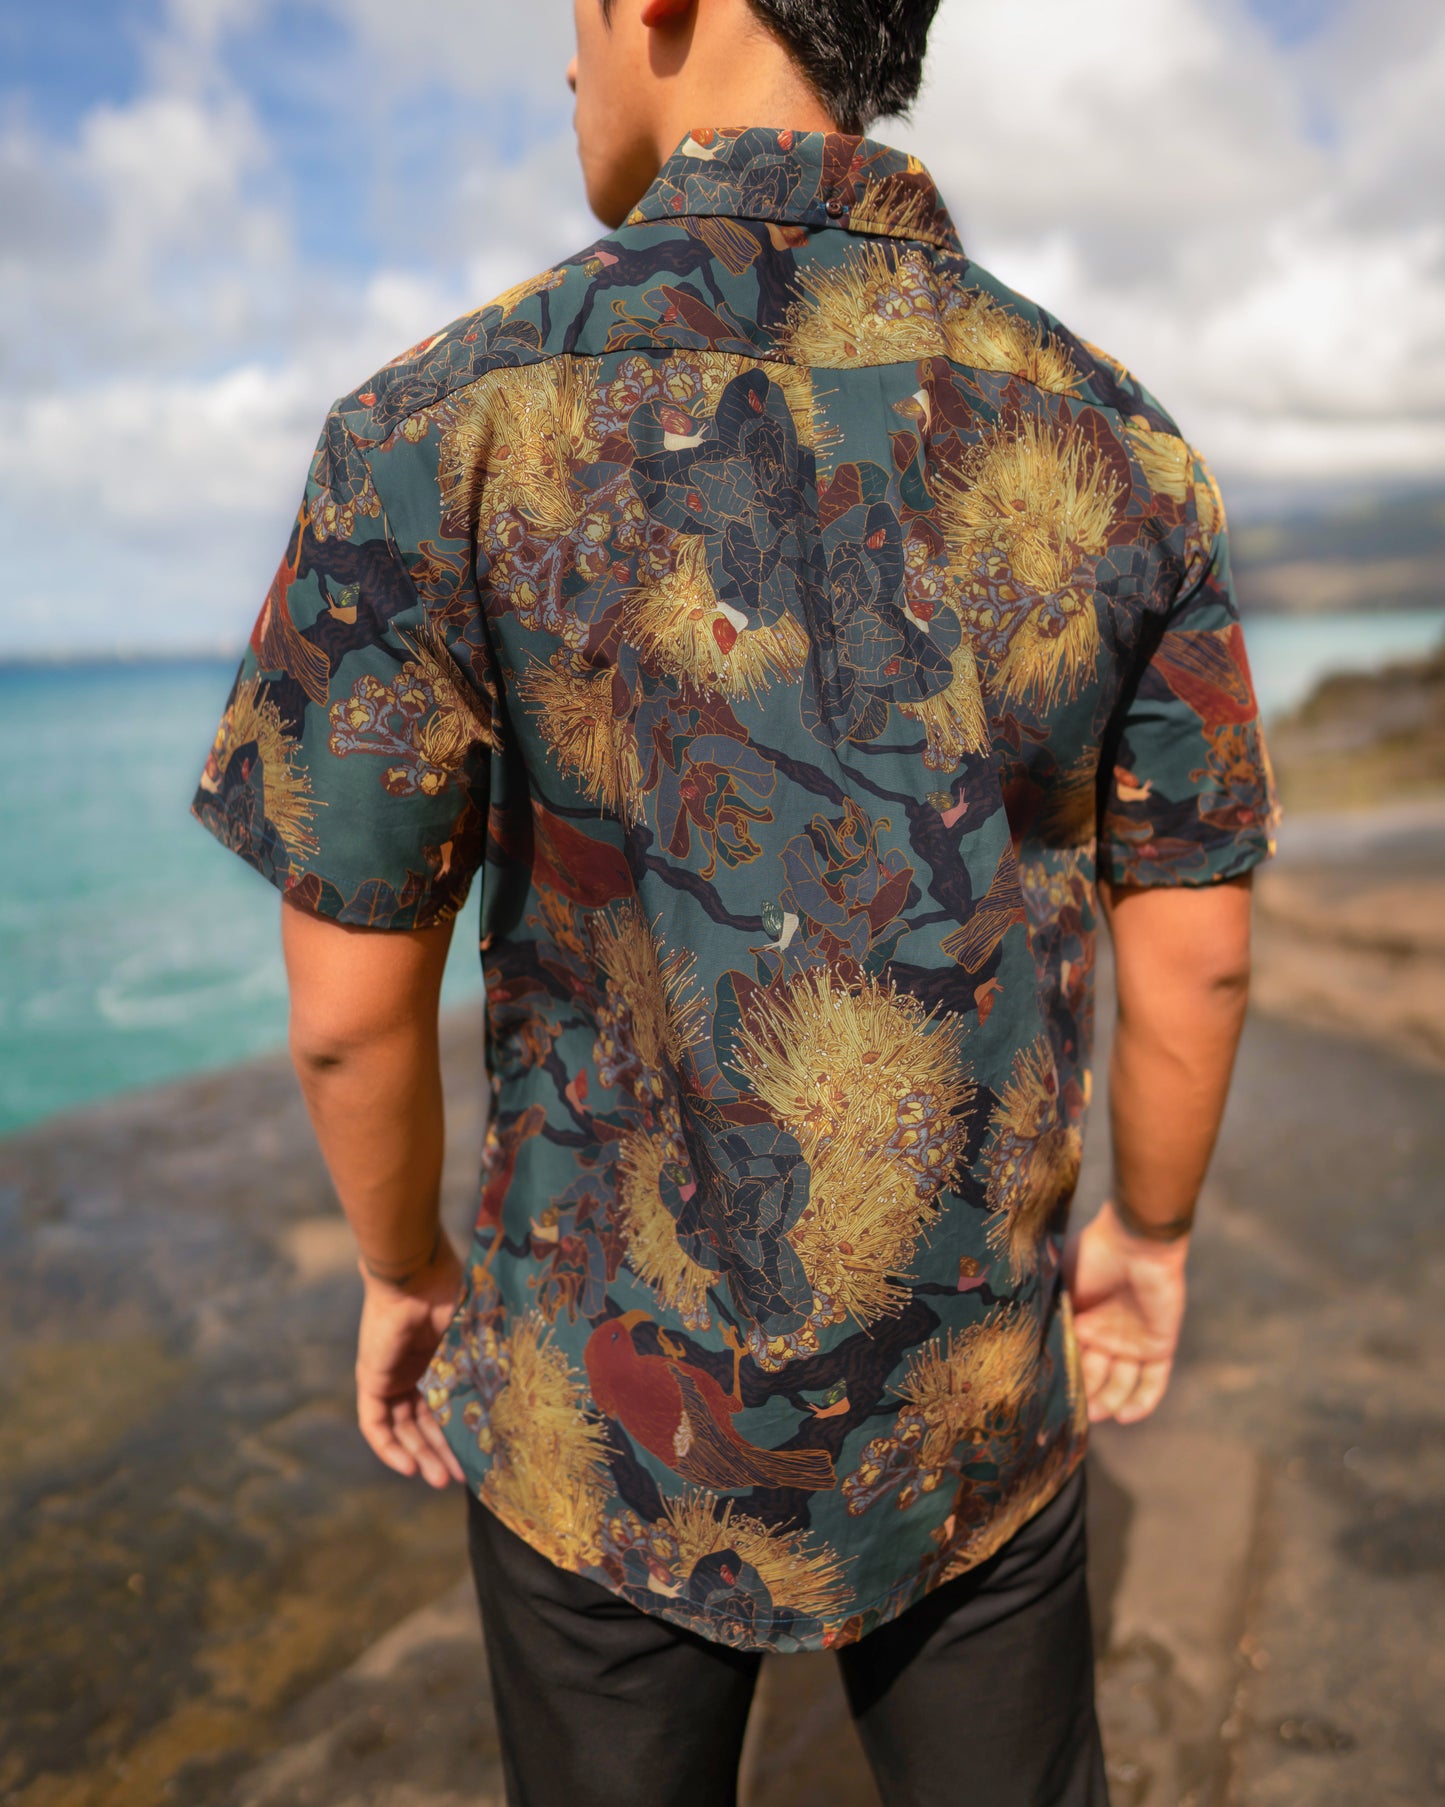 Kaniakapūpū Lehua Mamo Green Aloha Shirt